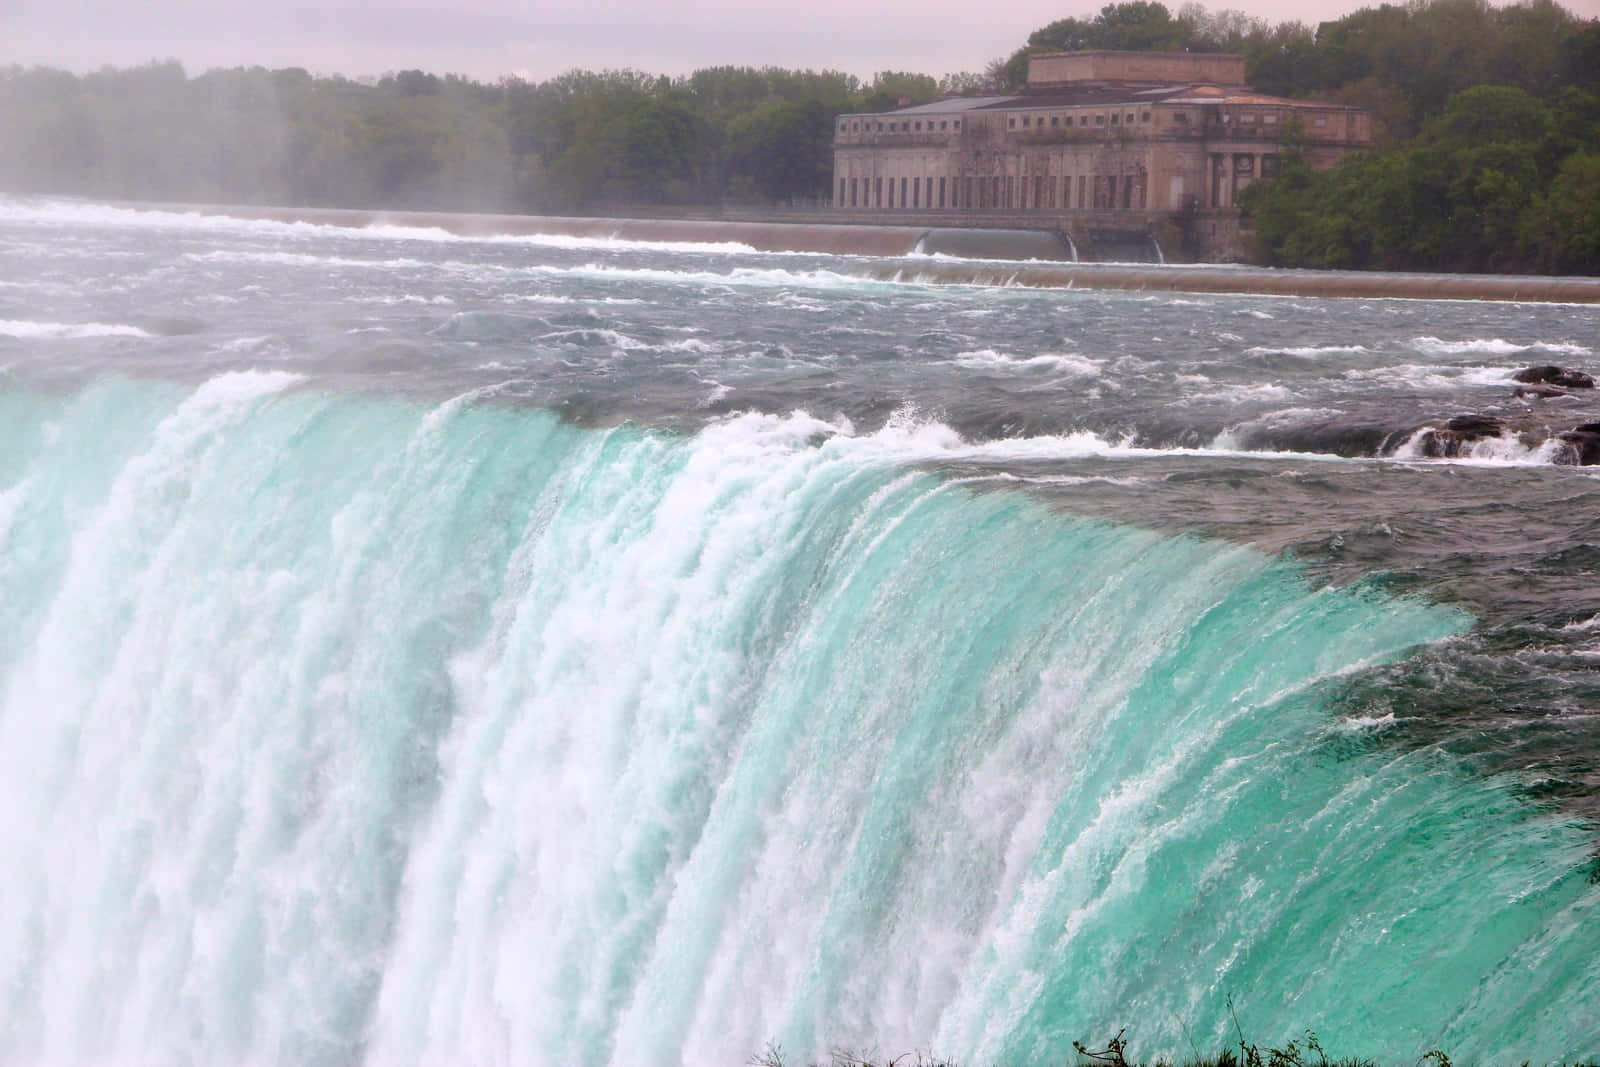 Experiencing the illustrious beauty of Niagara Falls